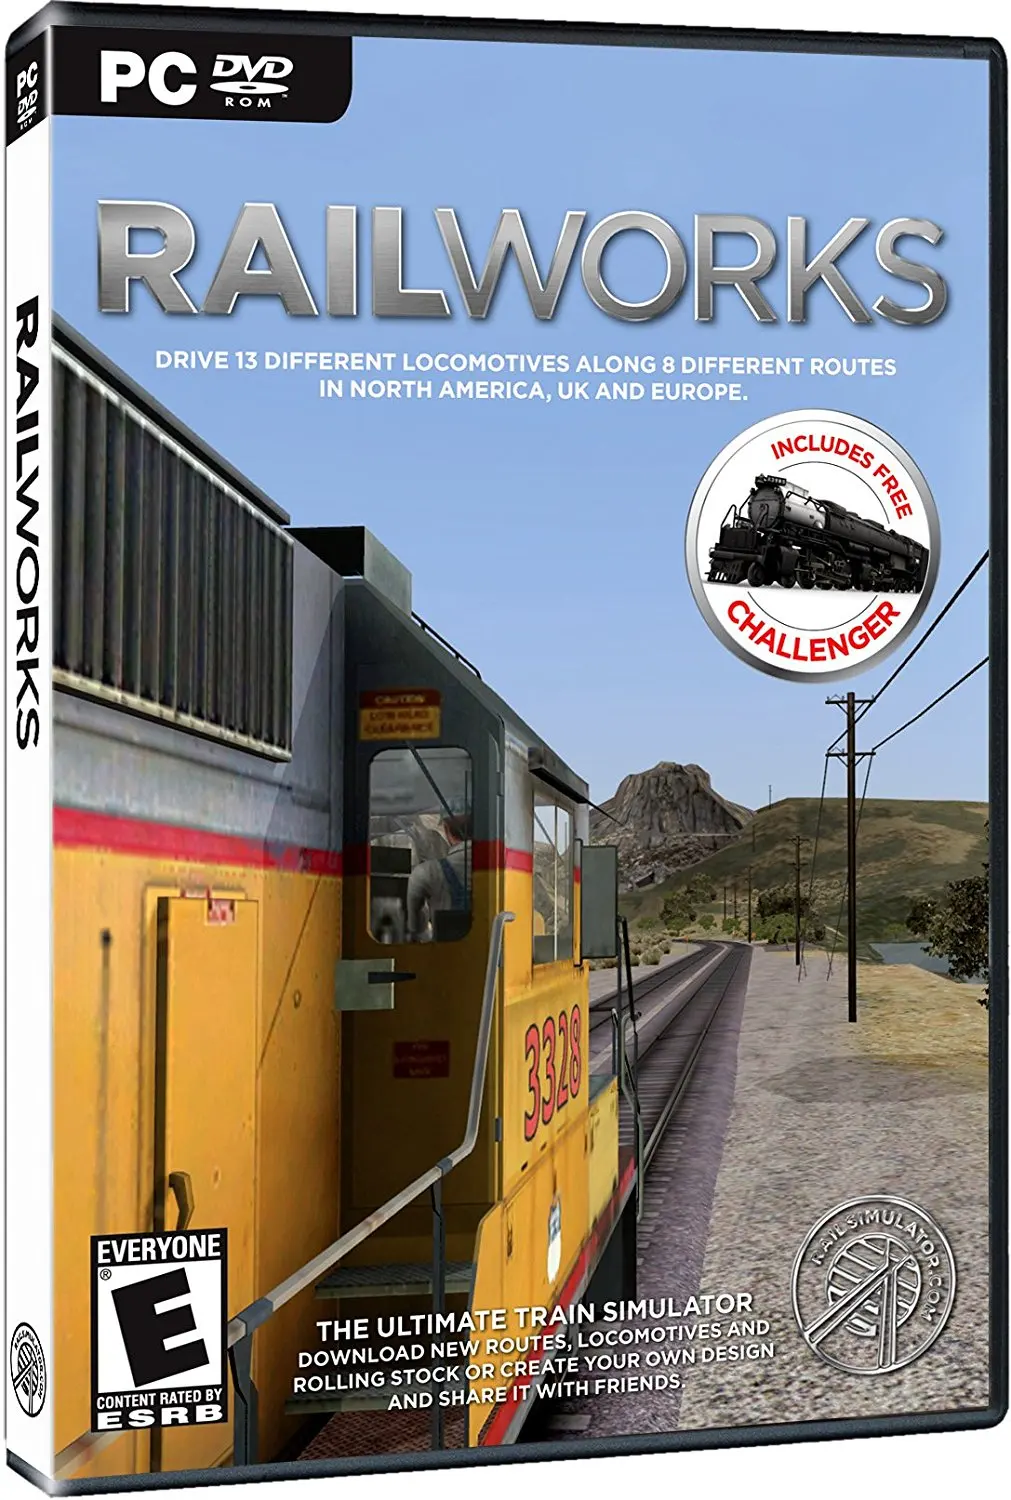 Cheap Railworks 2 Train Simulator Find Railworks 2 Train Simulator Deals On Line At Alibaba Com